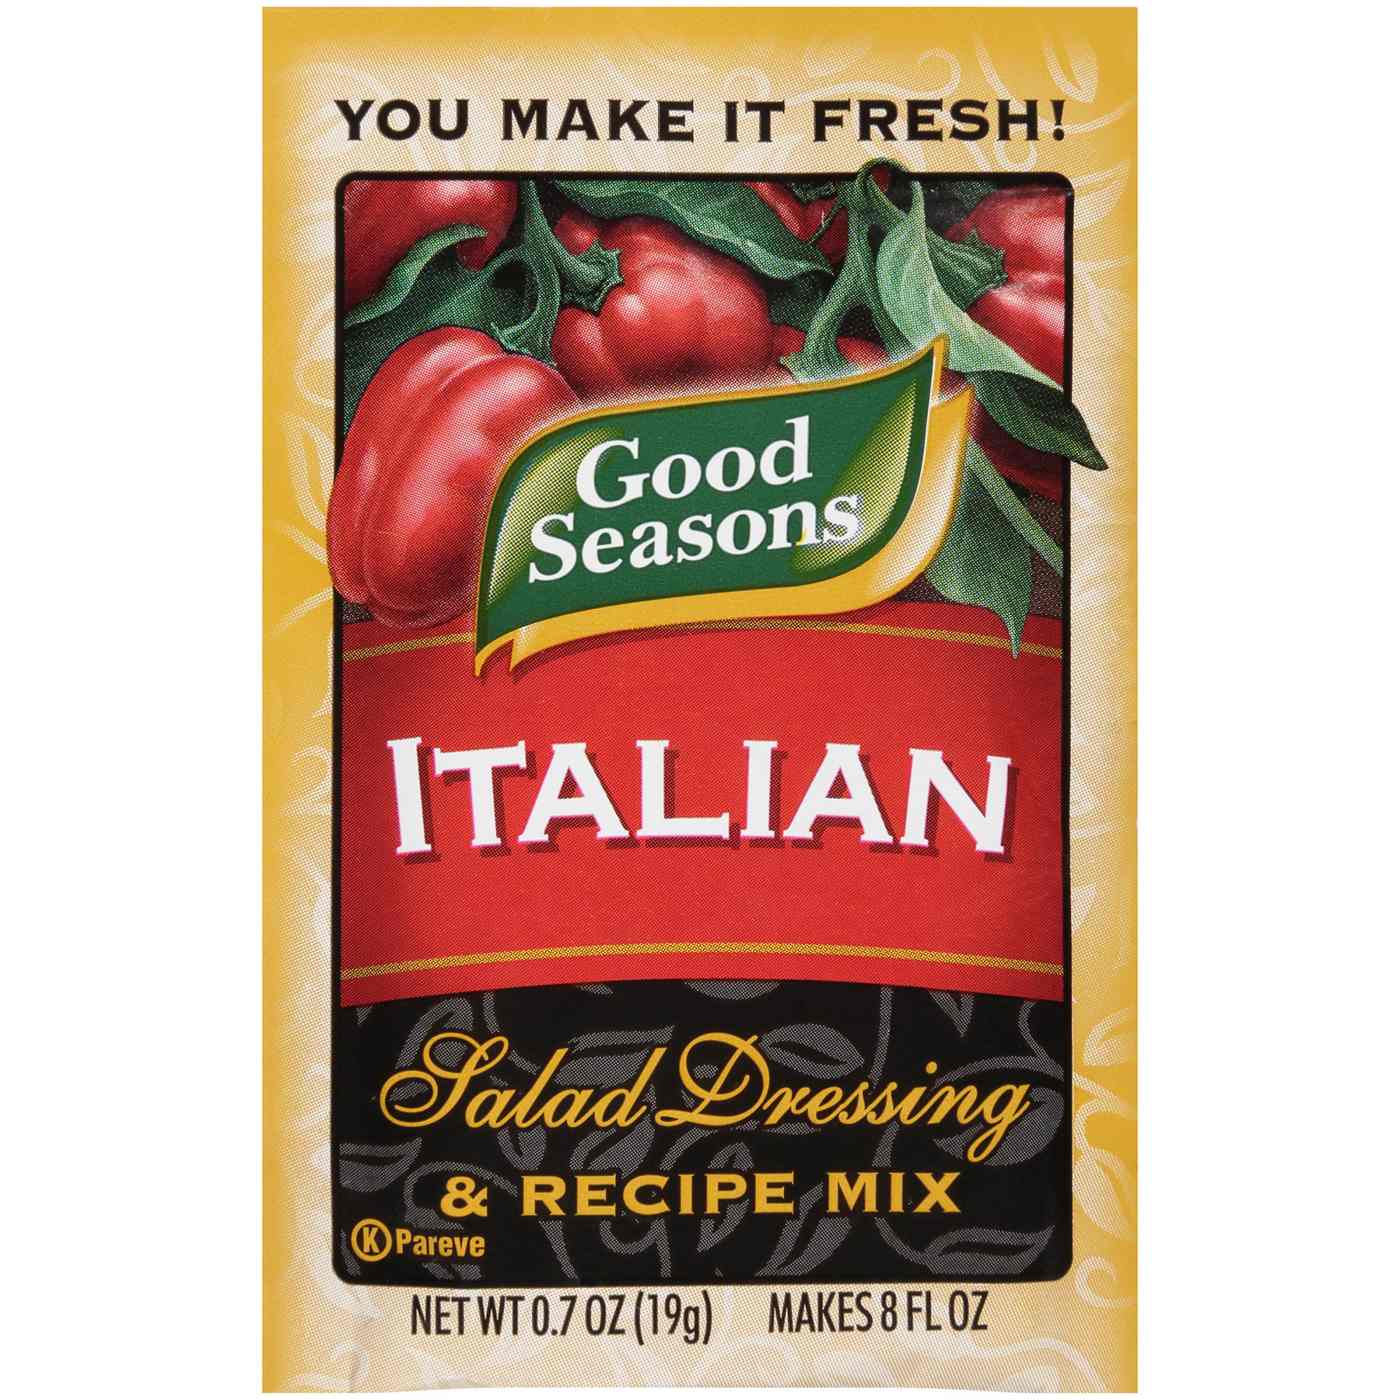 Good Seasons Italian Dry Salad Dressing and Recipe Mix; image 1 of 2